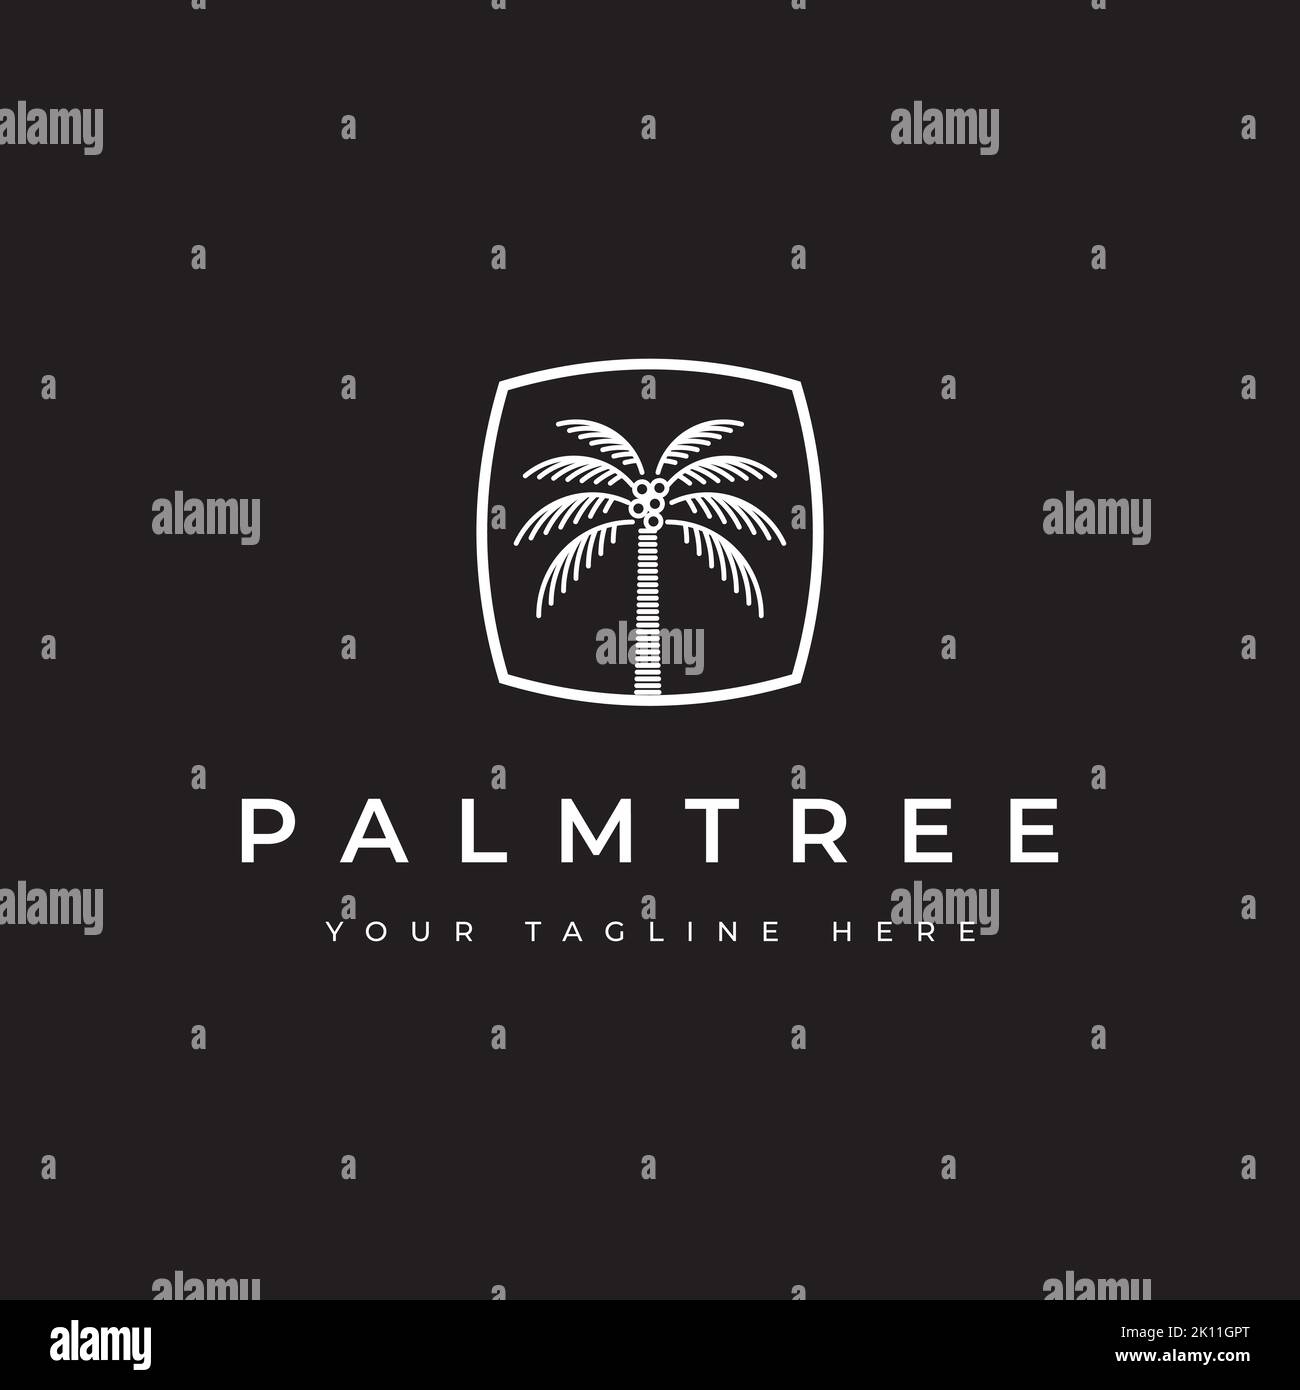 Kokospalme Logo Design Vektor Vorlage. Palmensymbol Stock Vektor